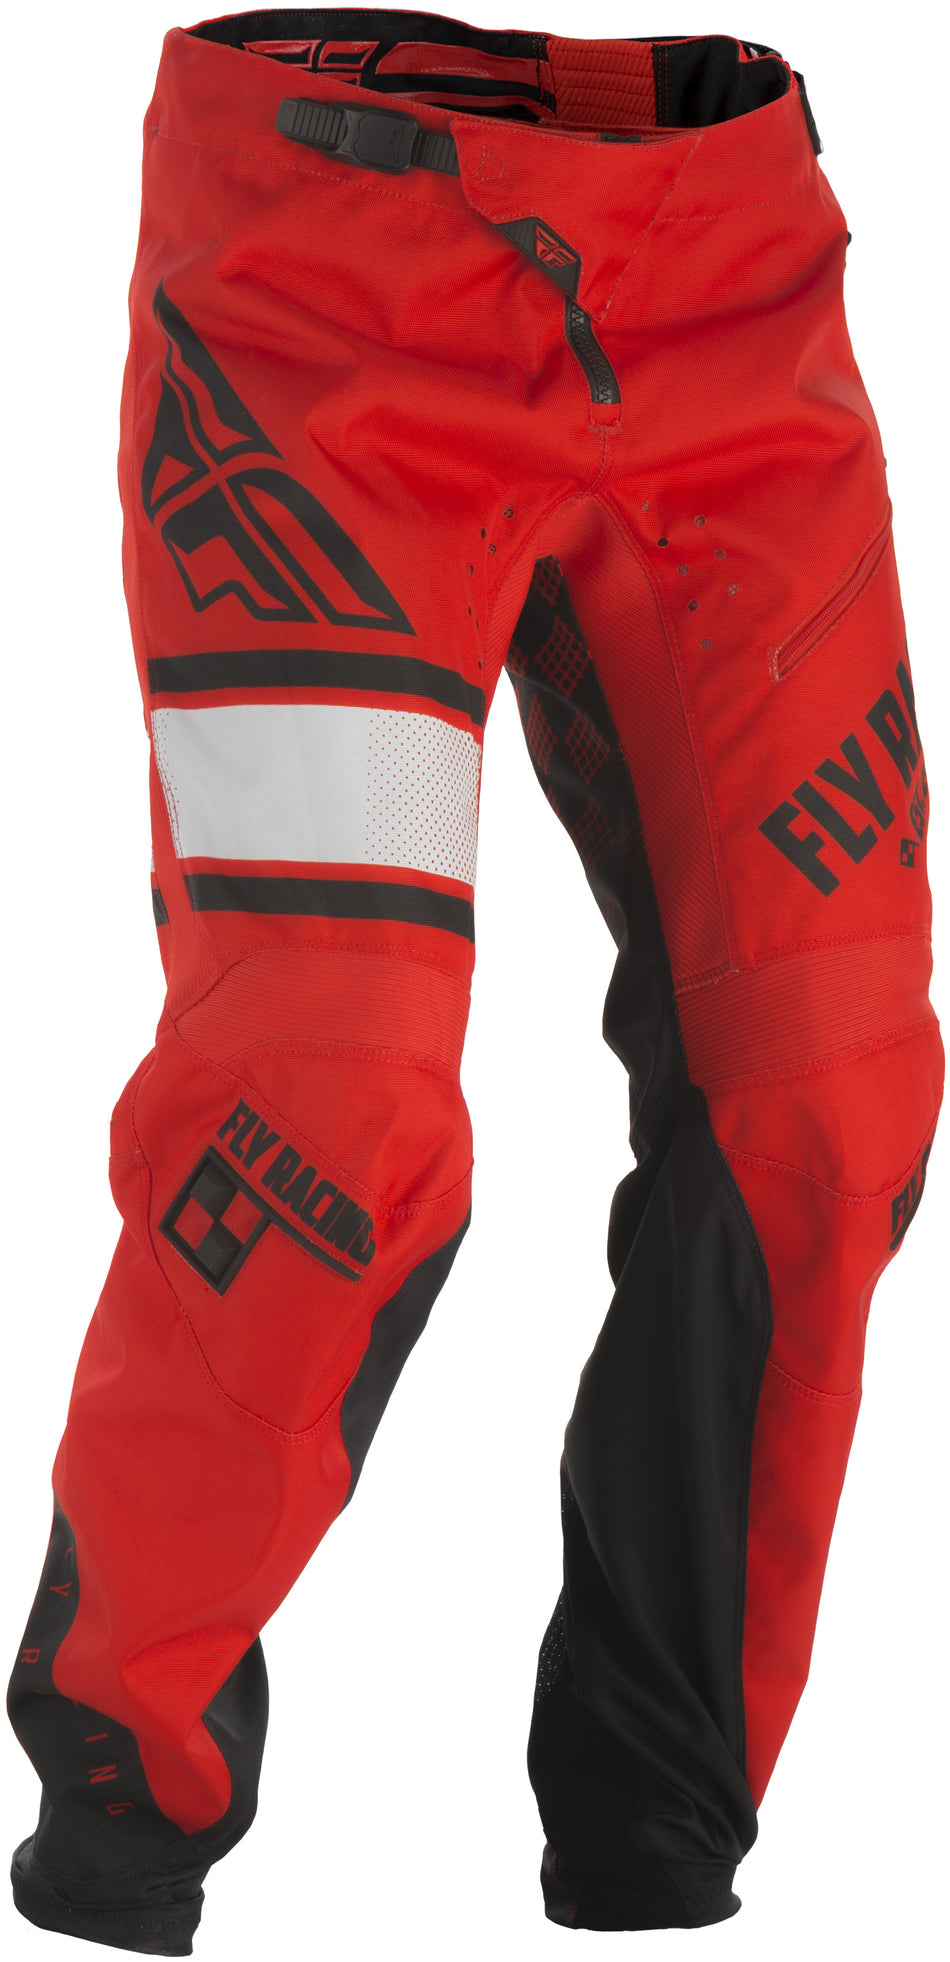 FLY RACING Kinetic Era Bicycle Pants Red/Black Sz 32 371-02232